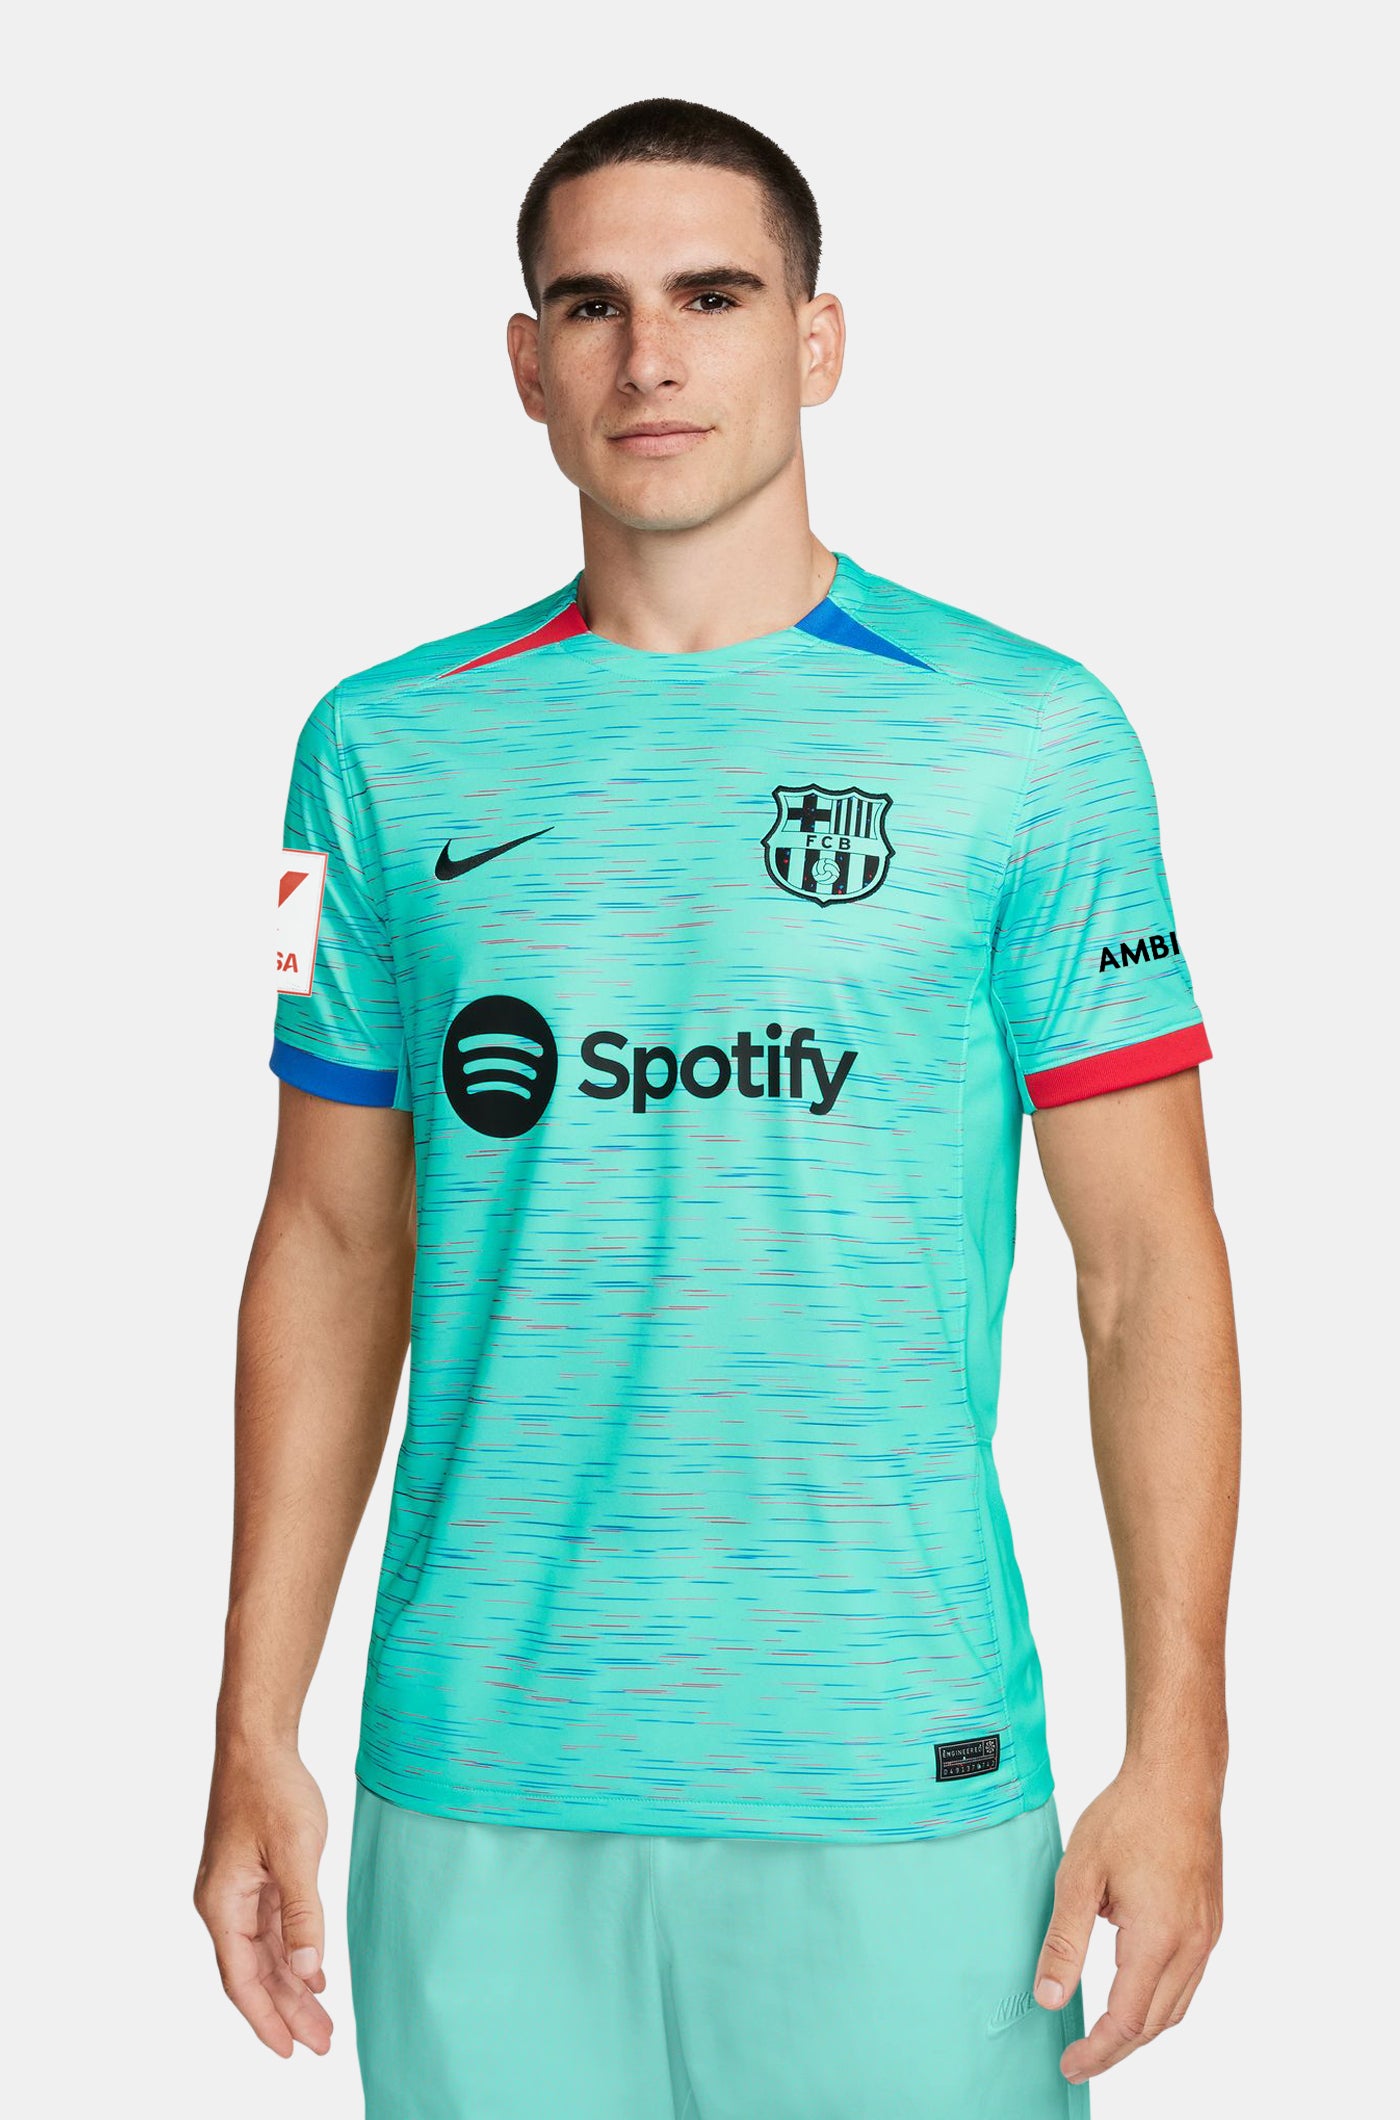 pint Diplomati ujævnheder FC Barcelona third shirt 23/24 – Barça Official Store Spotify Camp Nou